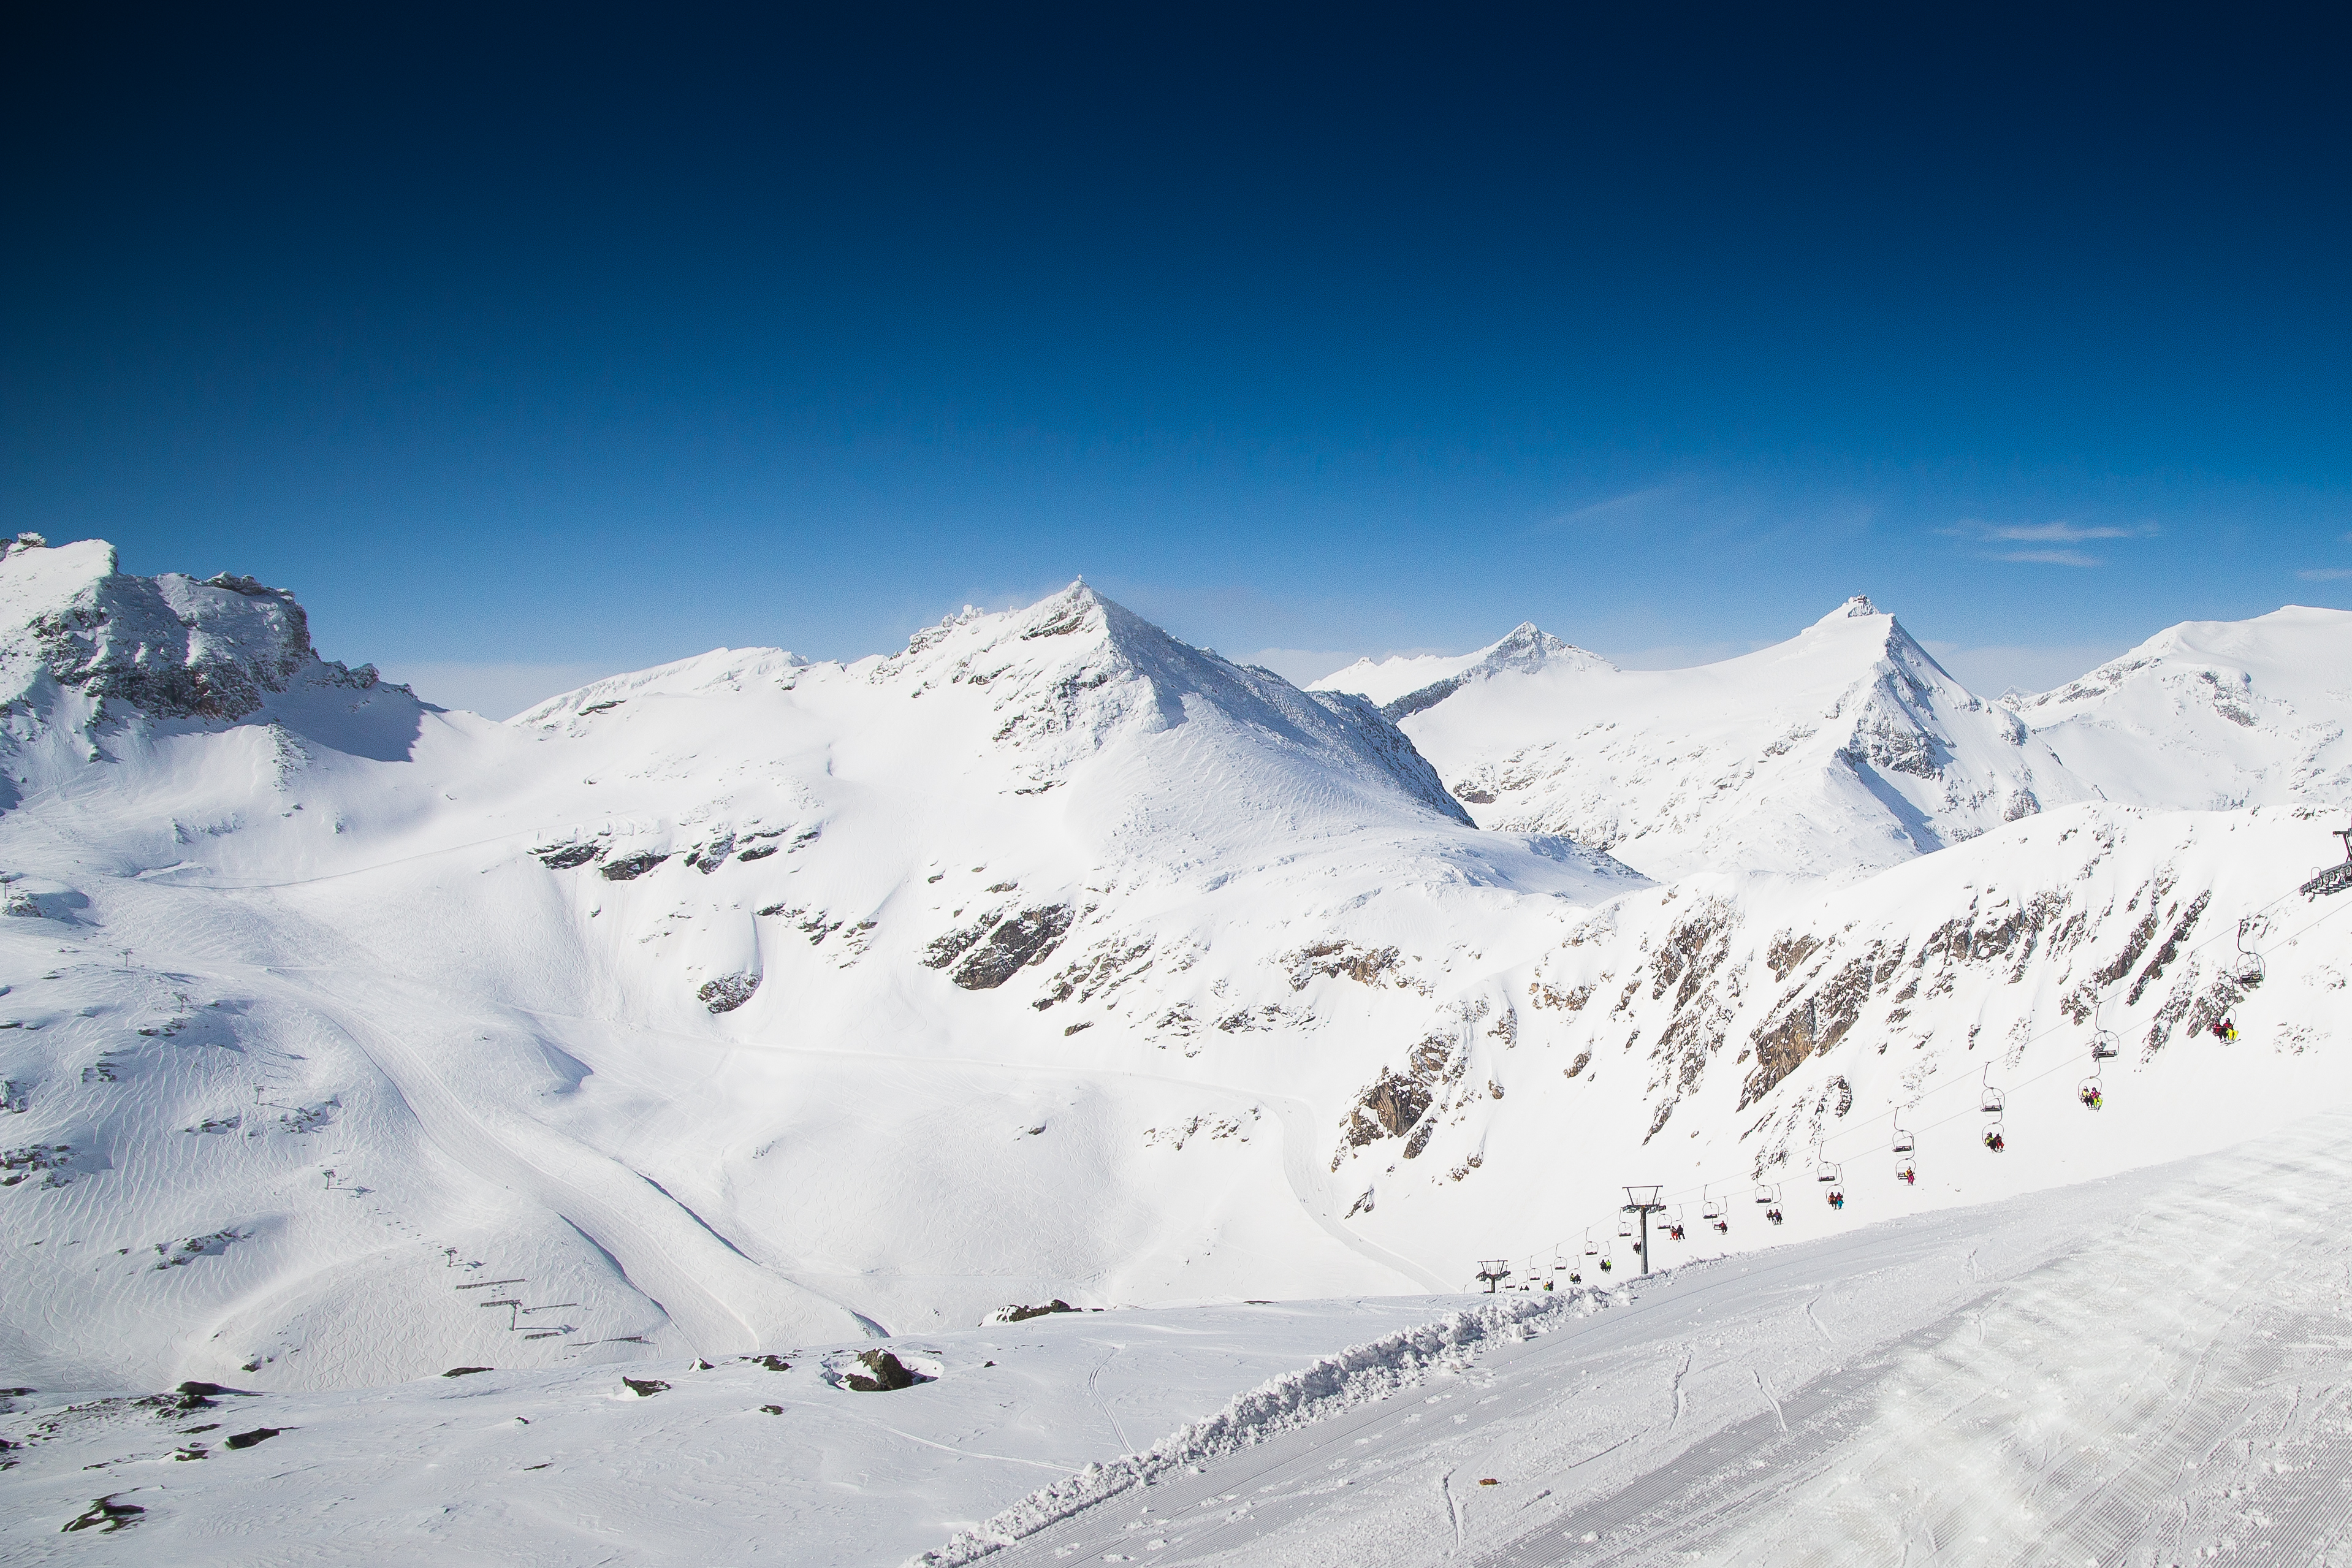 Download Wonderful Winter Mountain Scenery FREE Stock Photo